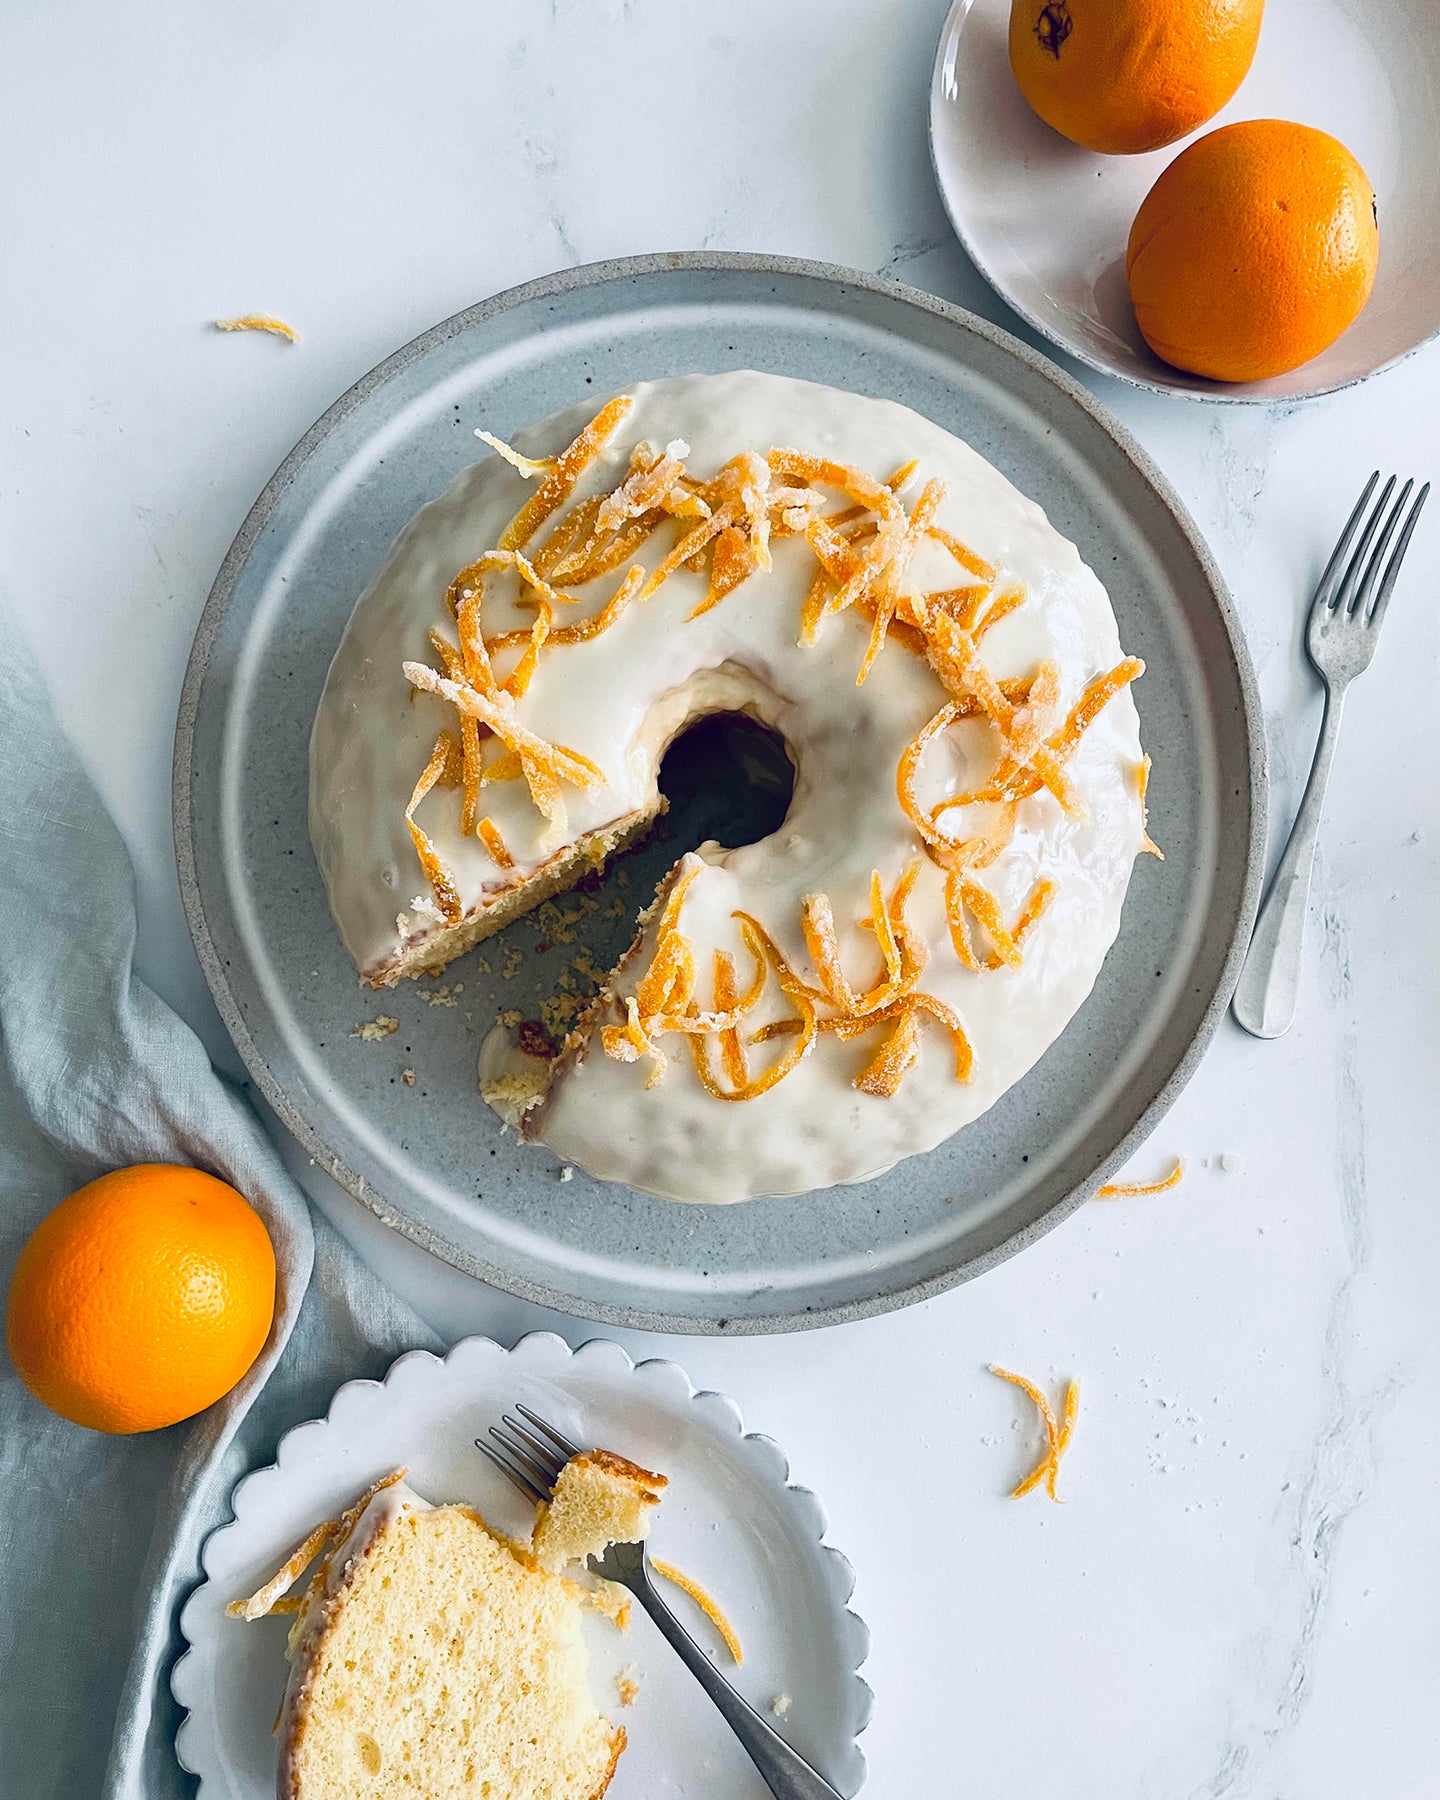 Orange Chiffon Cake Recipe